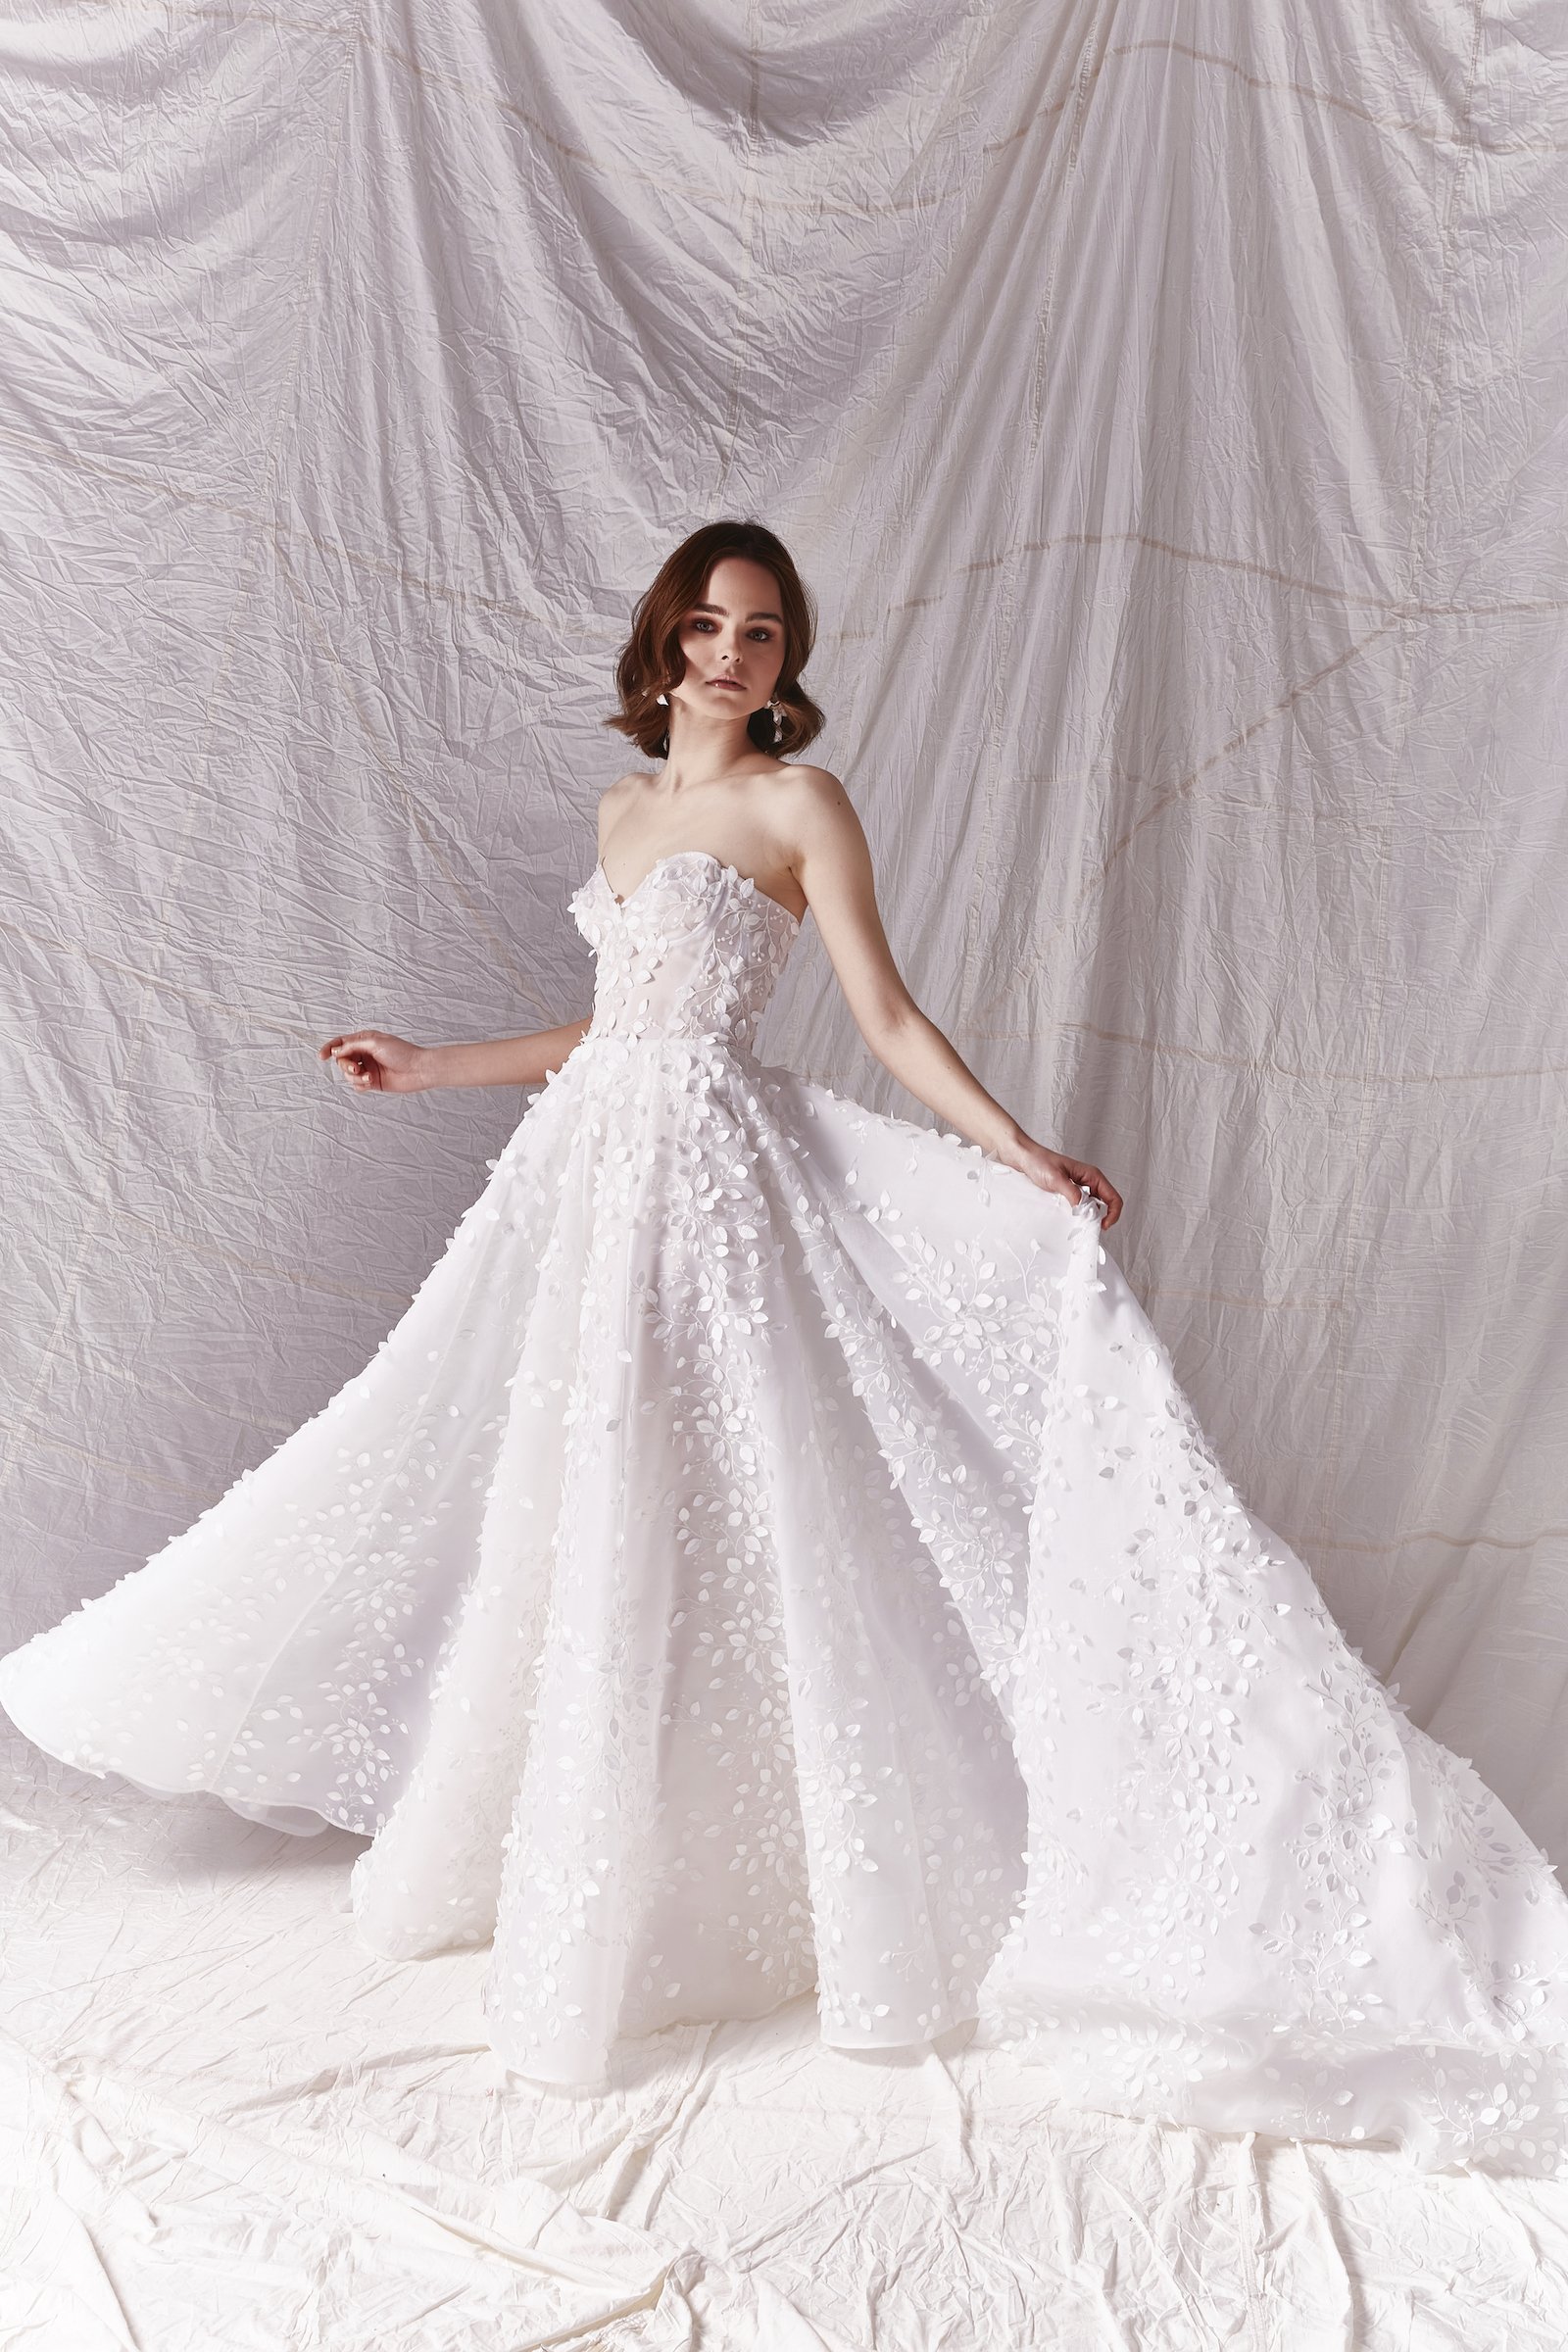 Savin London — White Lace & Butterflies Bridal Boutique